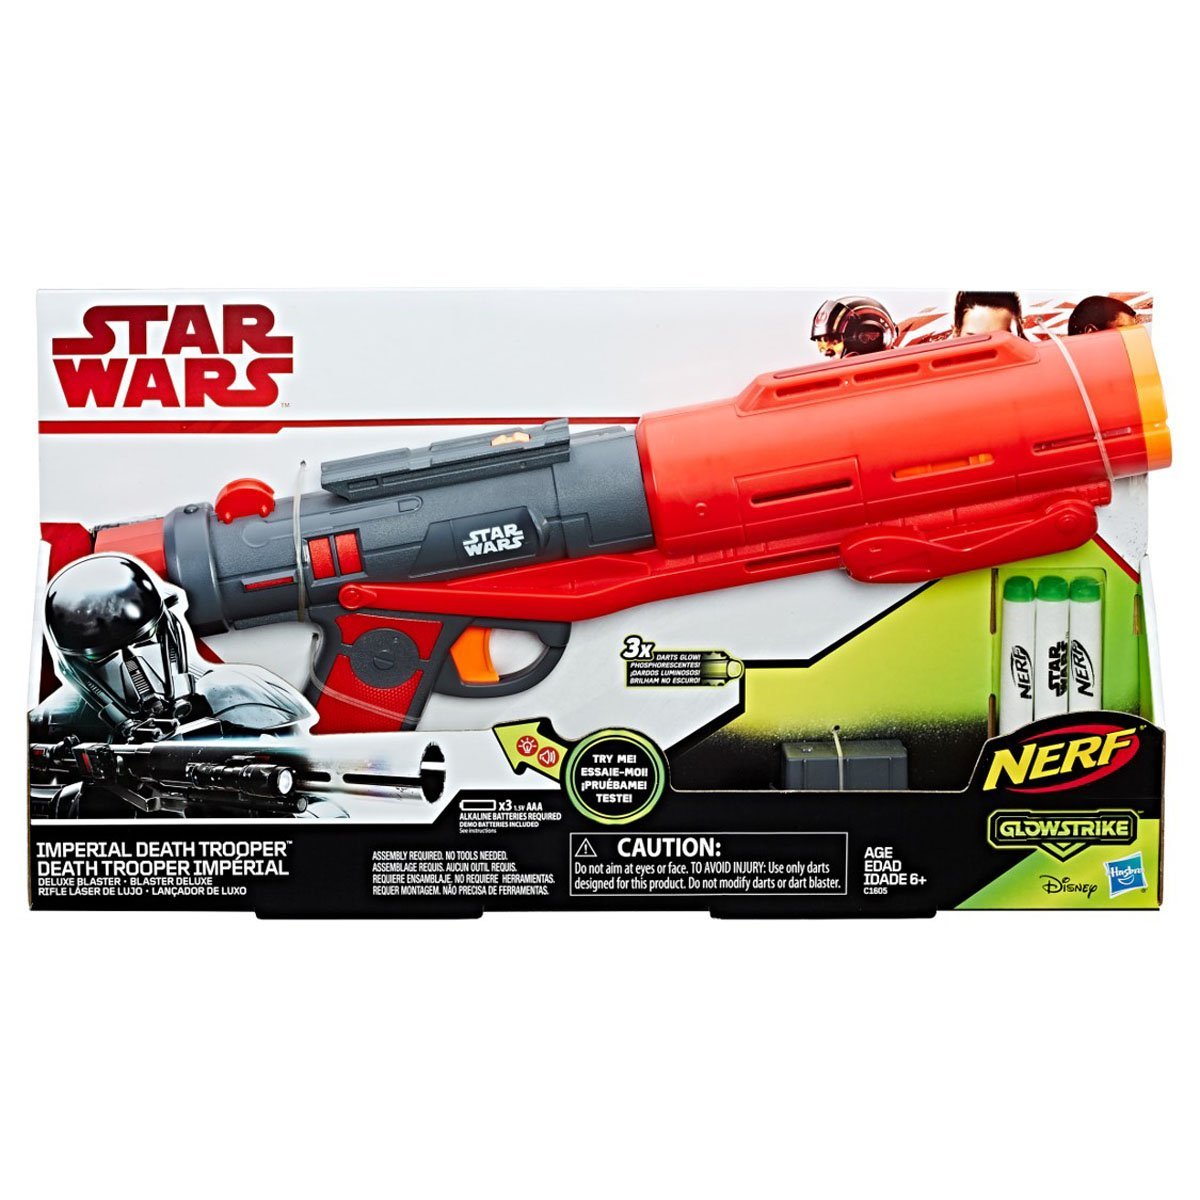 Star Wars Imperial Death Trooper Deluxe Blaster Hasbro